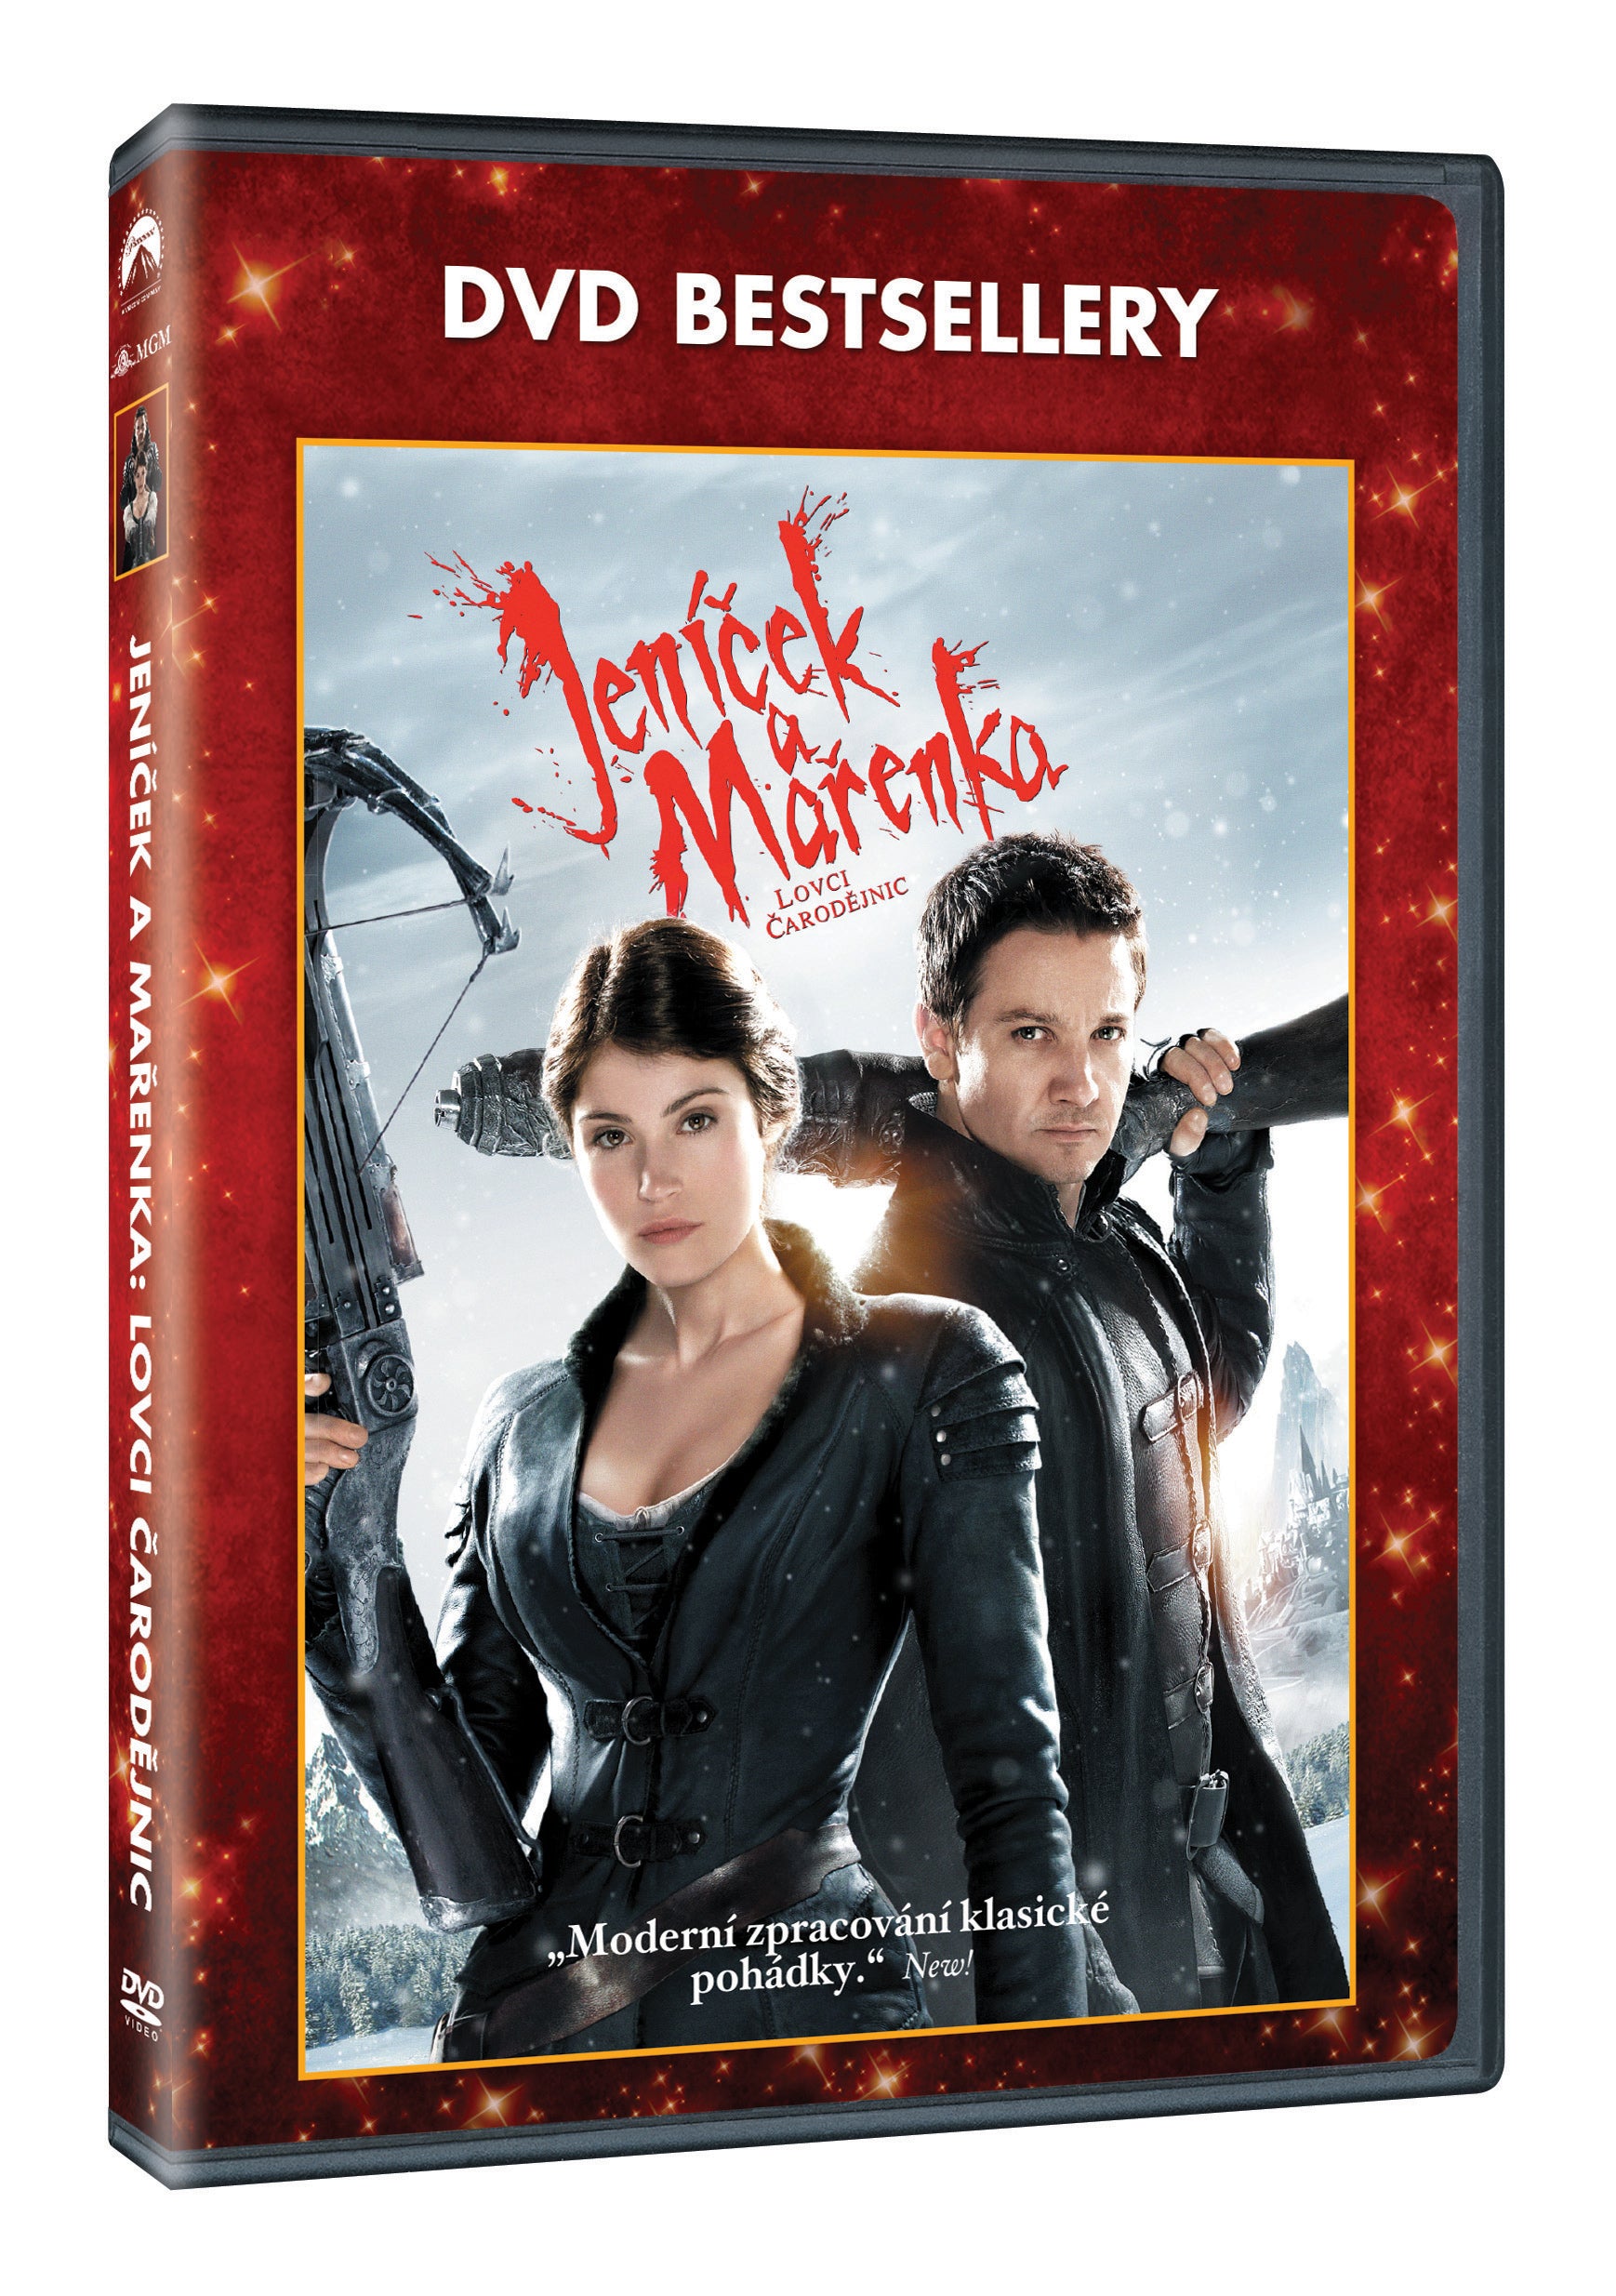 Jenicek a Marenka: Lovci carodejnic - DVD bestsellery (Hansel and Gretel: Witch Hunters)